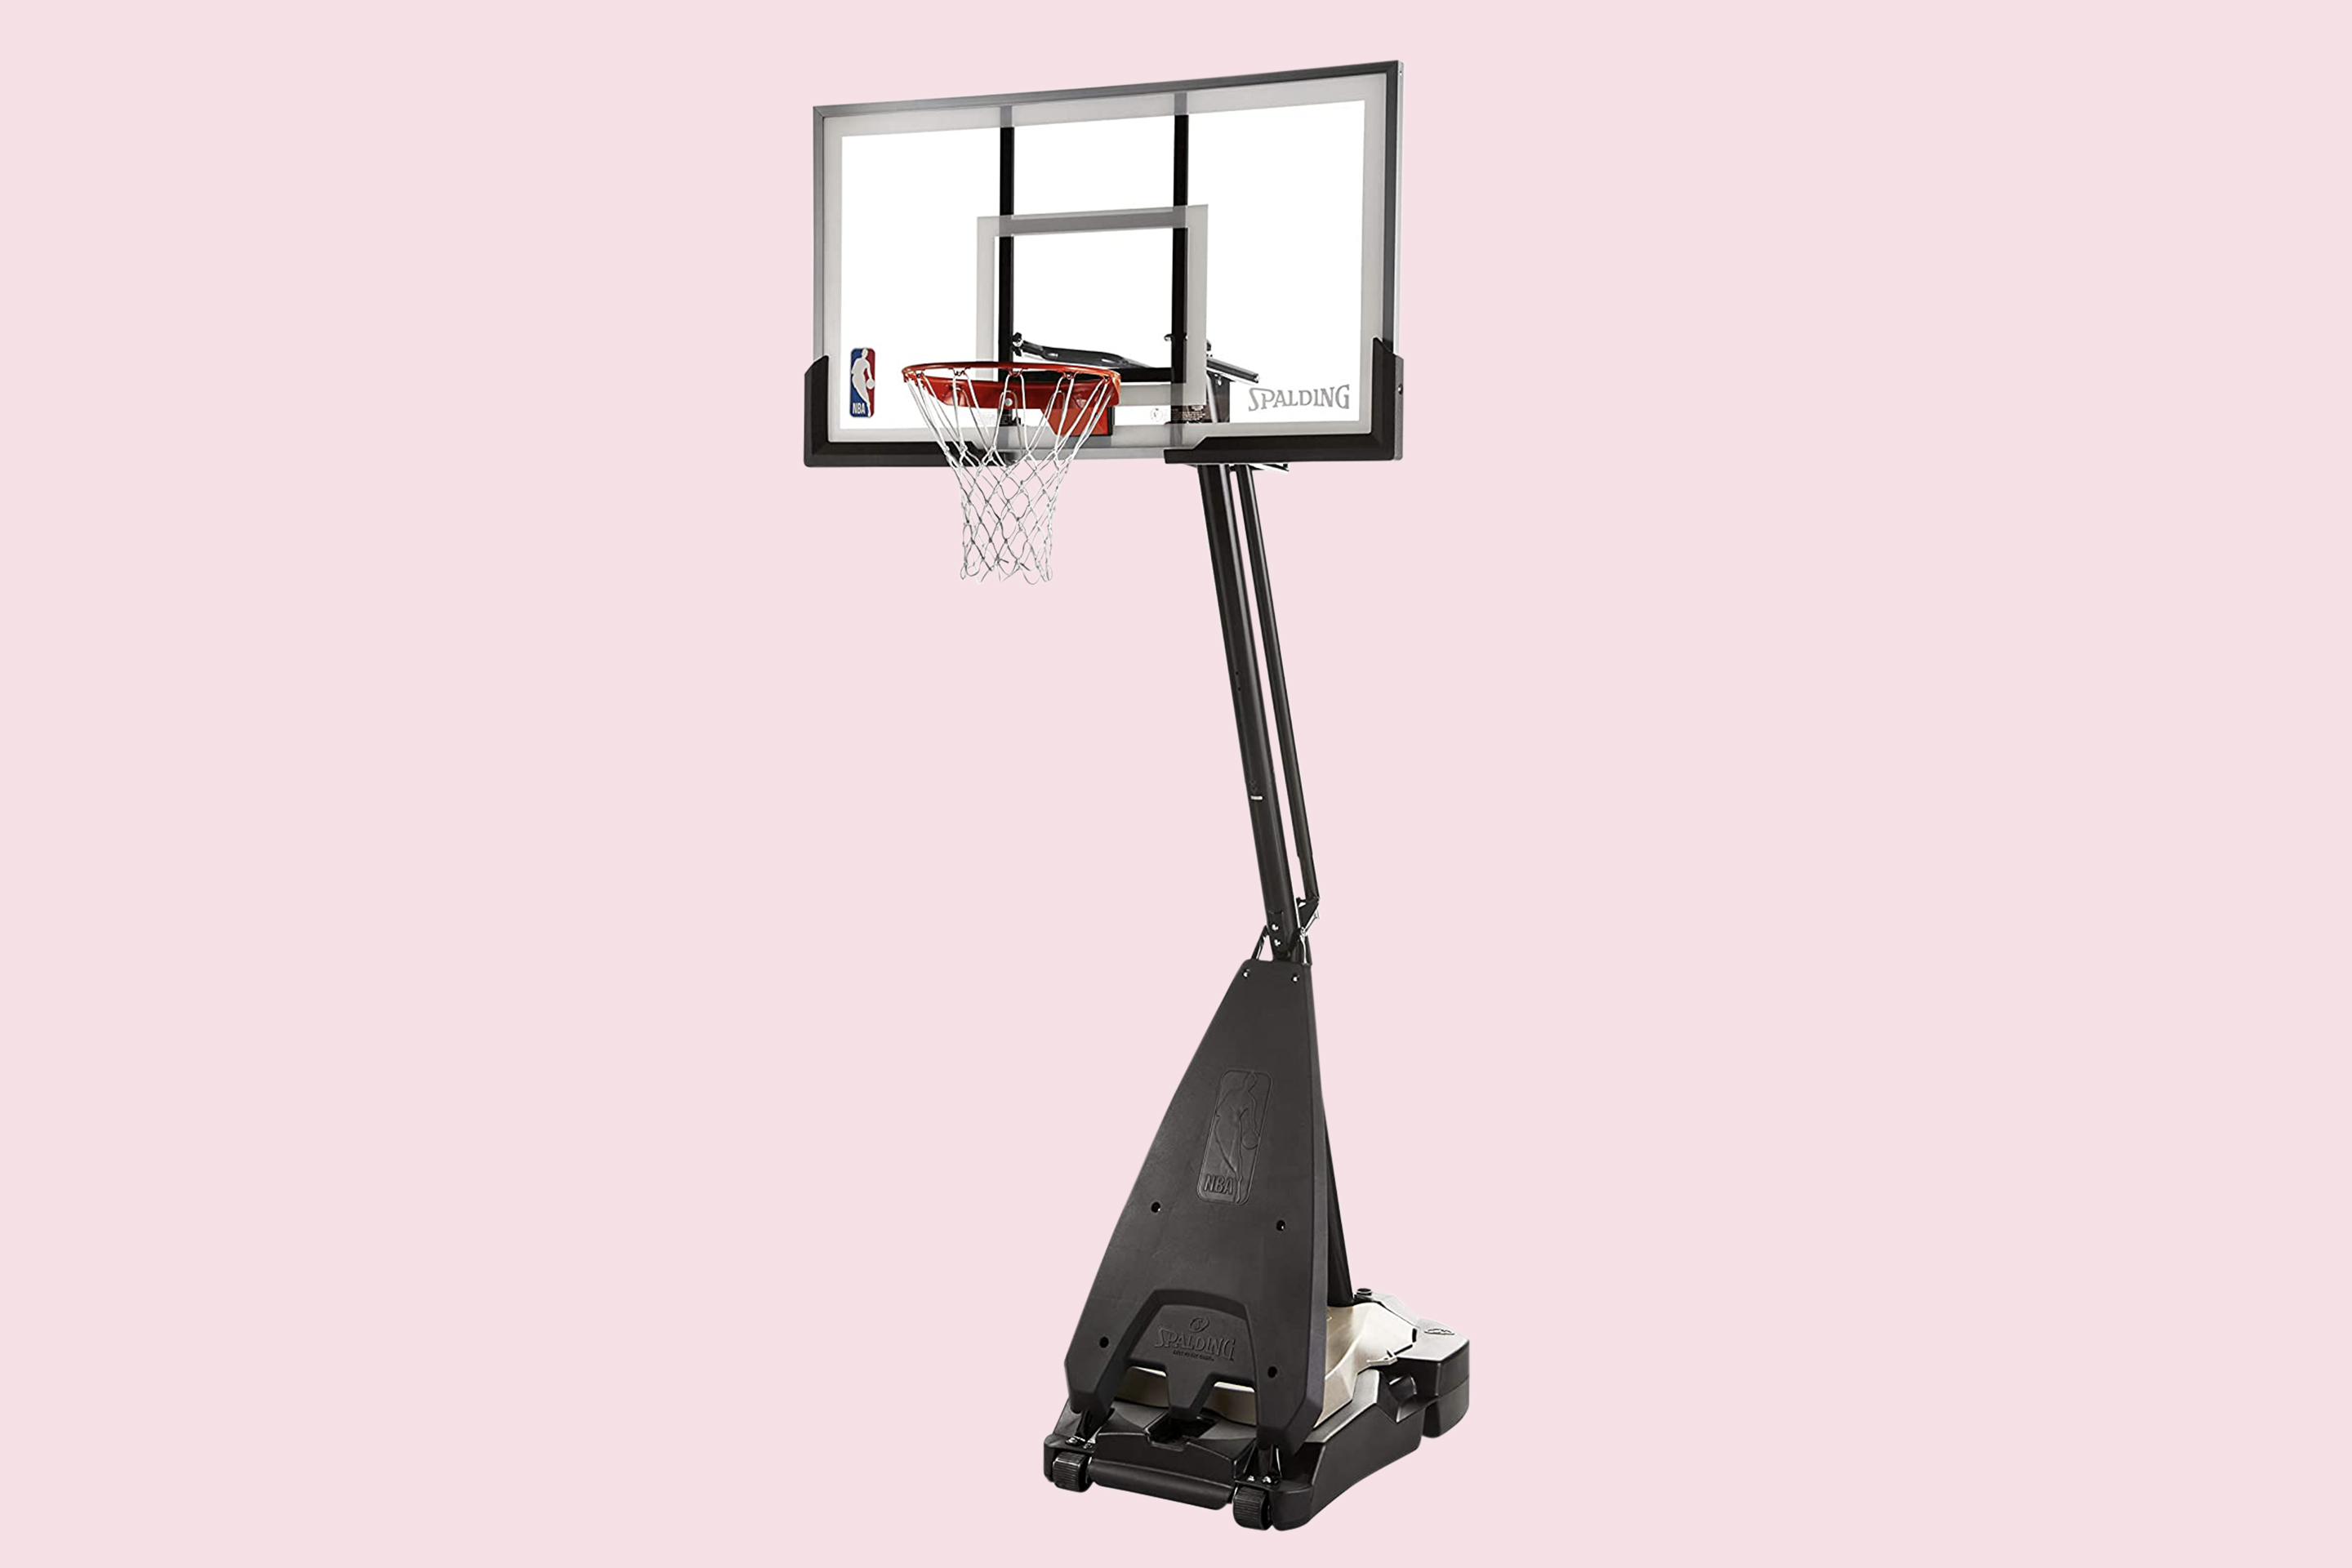 Spalding NBA Hybrid Portable Basketball Hoop System